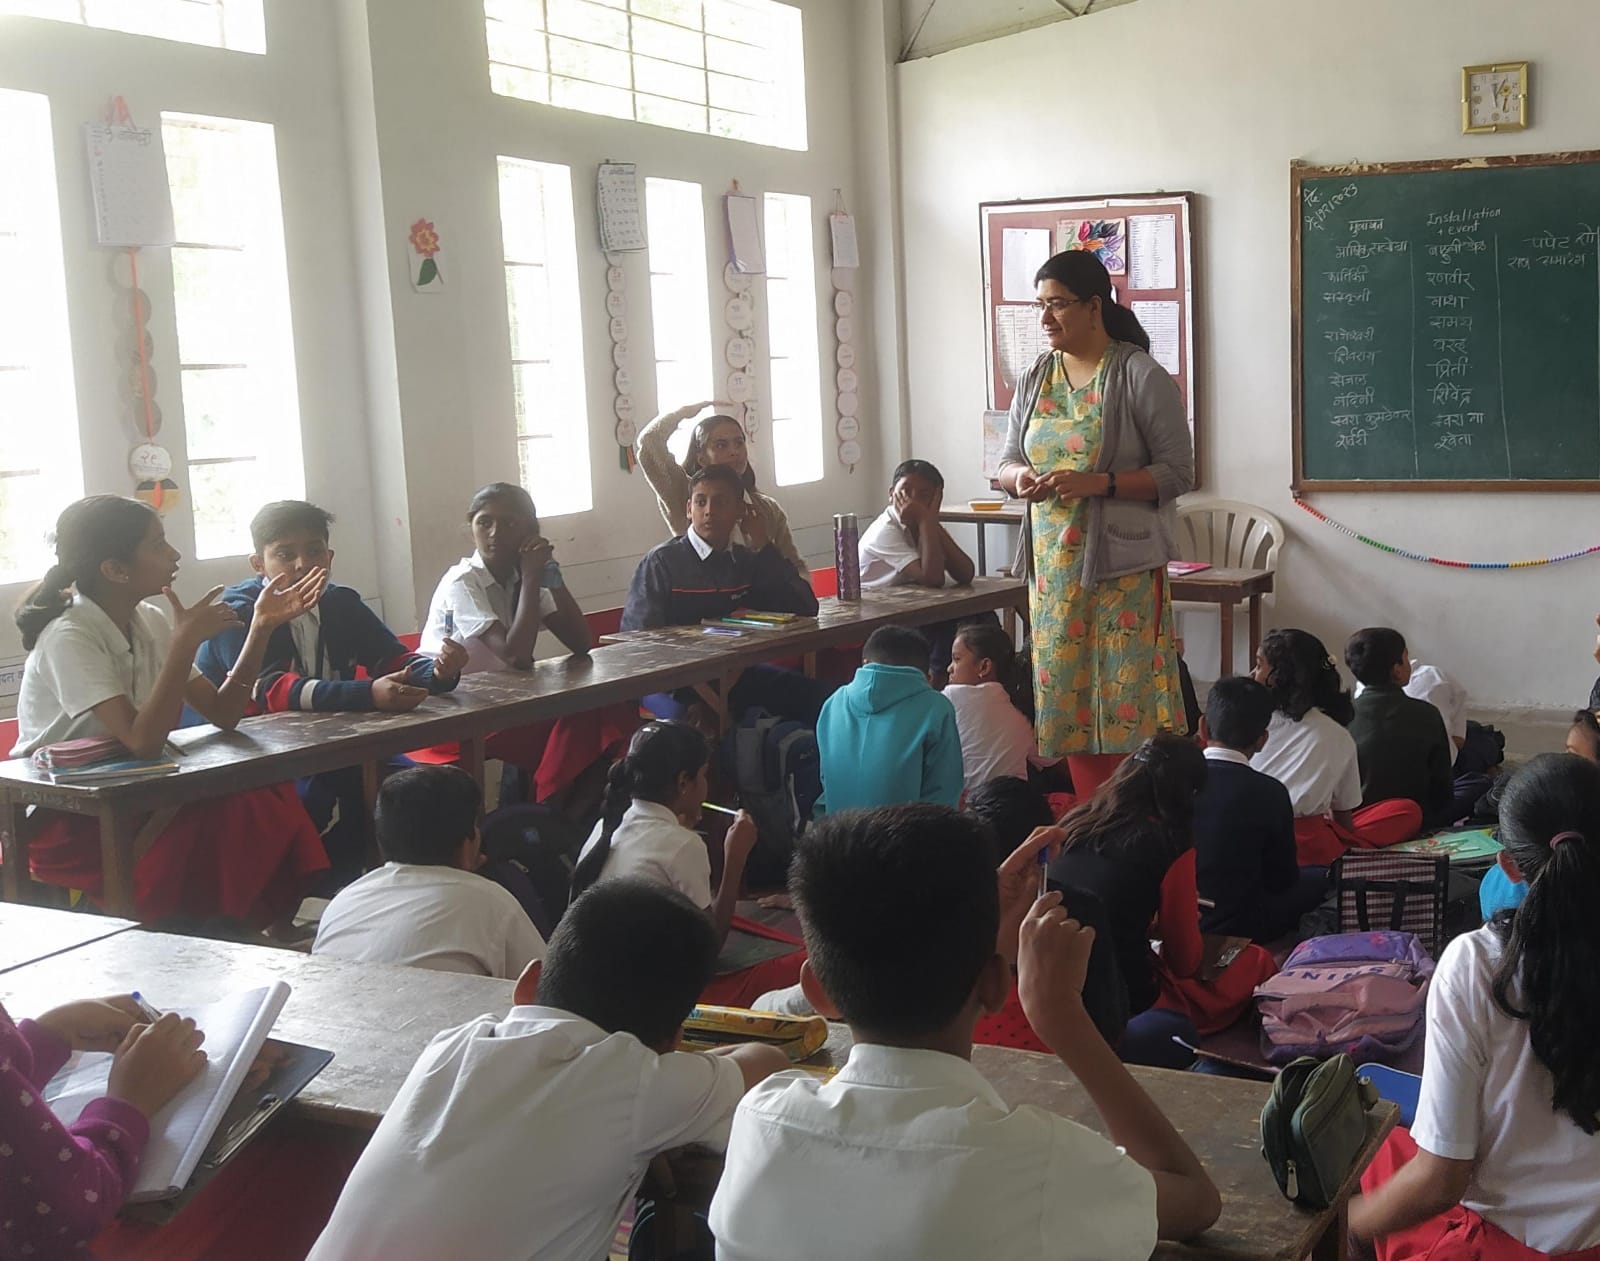 Madhura taking a class at Kamala Nimbkar Balbhavan